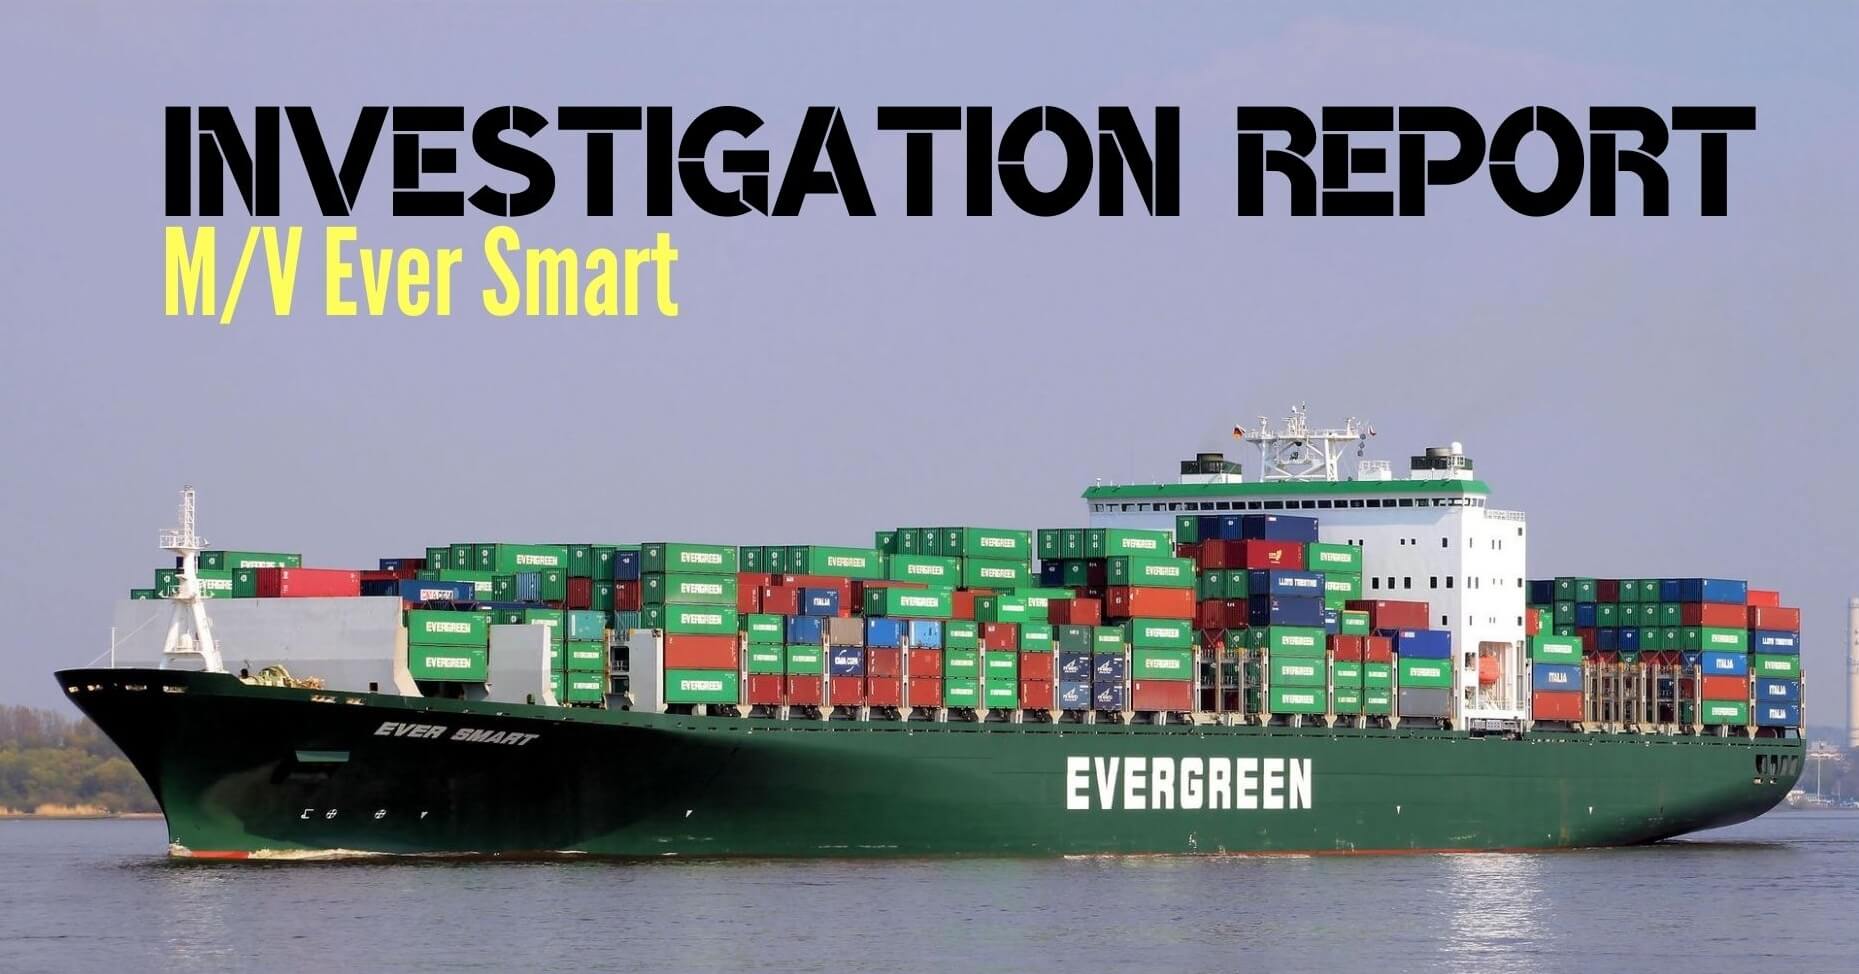 Ever Smart investigation report